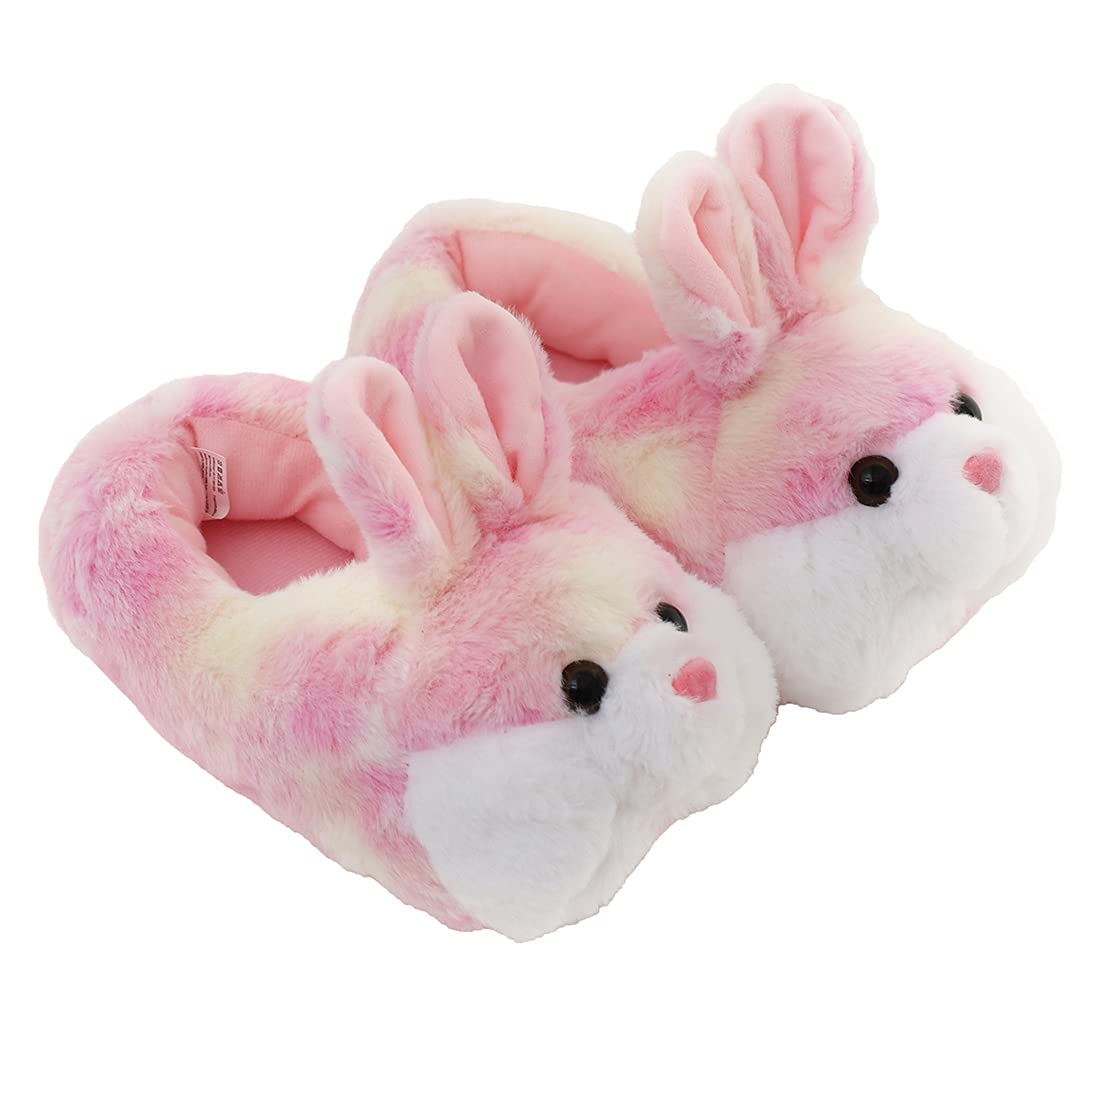 Millffy pink bunny slippers for women plush sneaker slippers womens cat slippers rabbit slippers